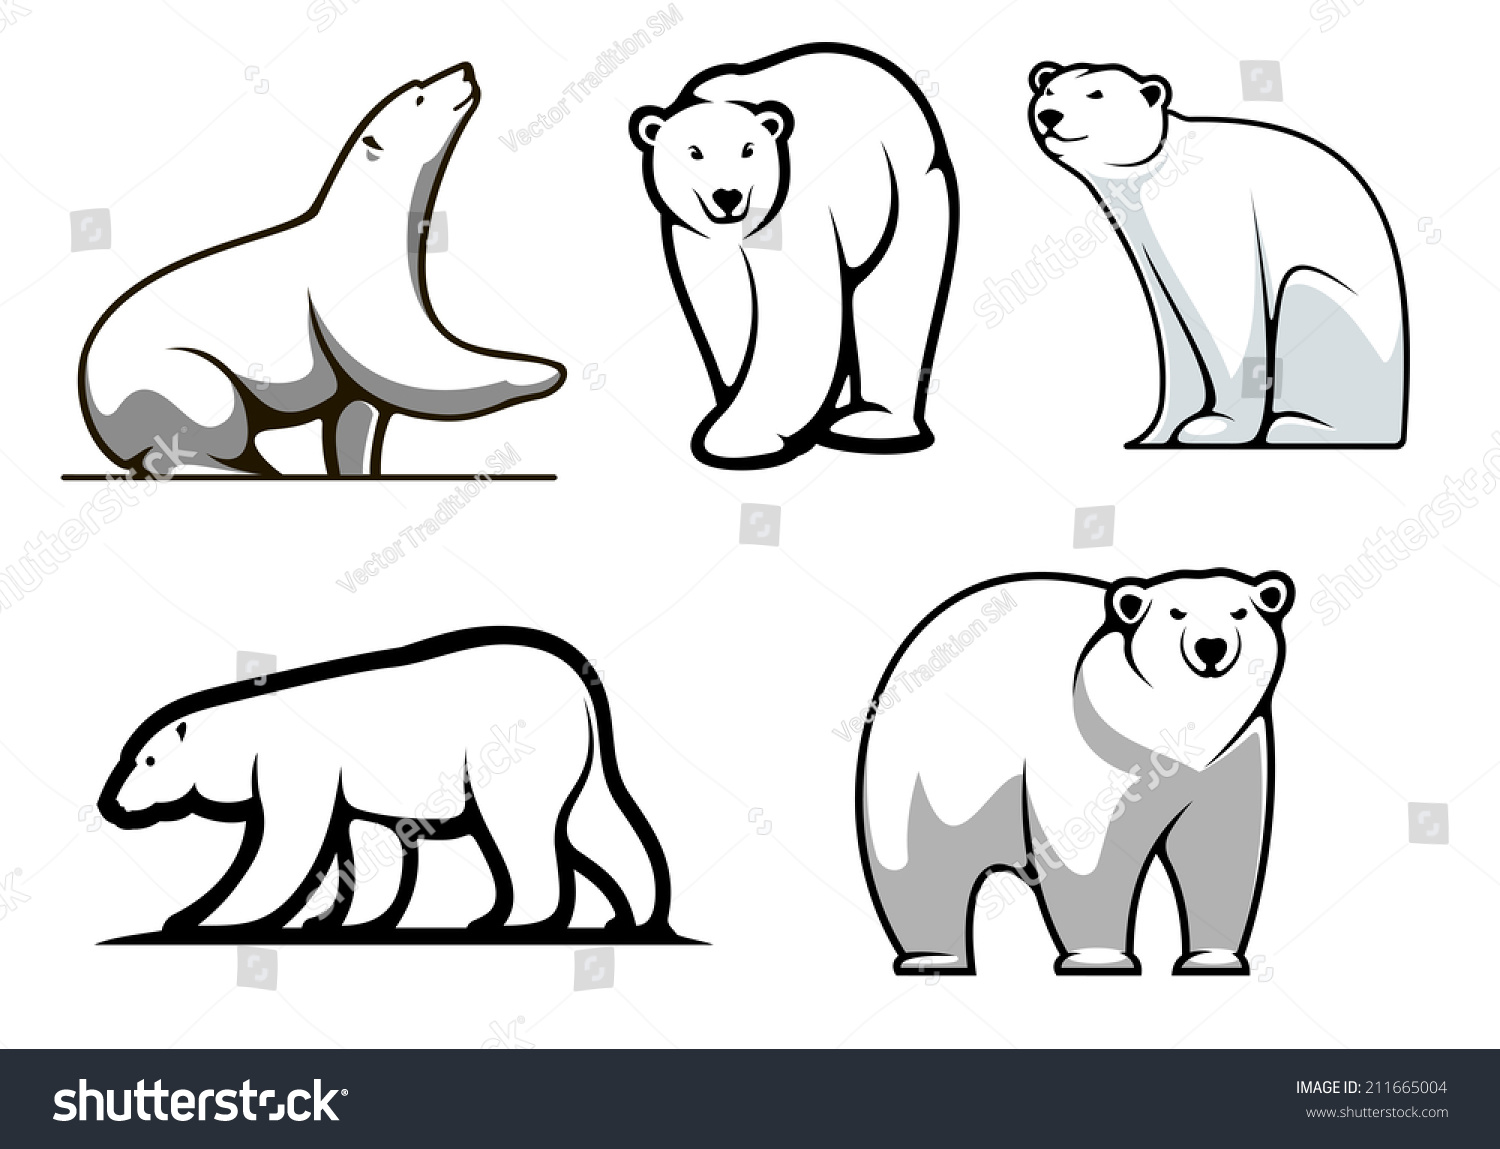 SVG of White polar bears set in cartoon style for mascot or logo design svg